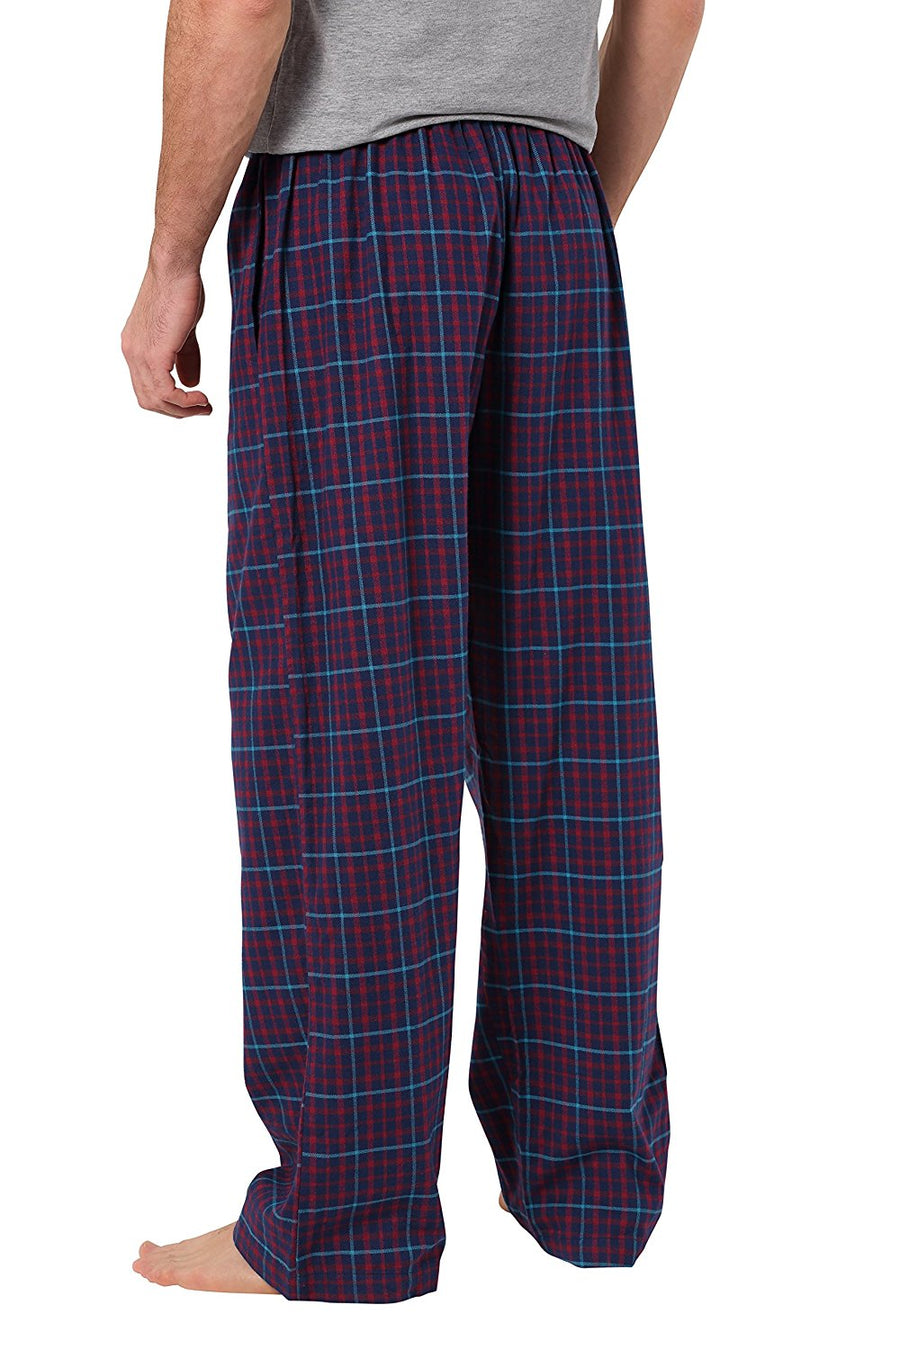 FELEMO Men's Super Soft Plaid Pajama Pants Men's Heavyweight Plaid Pajama  Pants Sleep Lounge Pant Men's Big Woven Pajama Pant Soft, Durable and Cozy,  XL at  Men's Clothing store